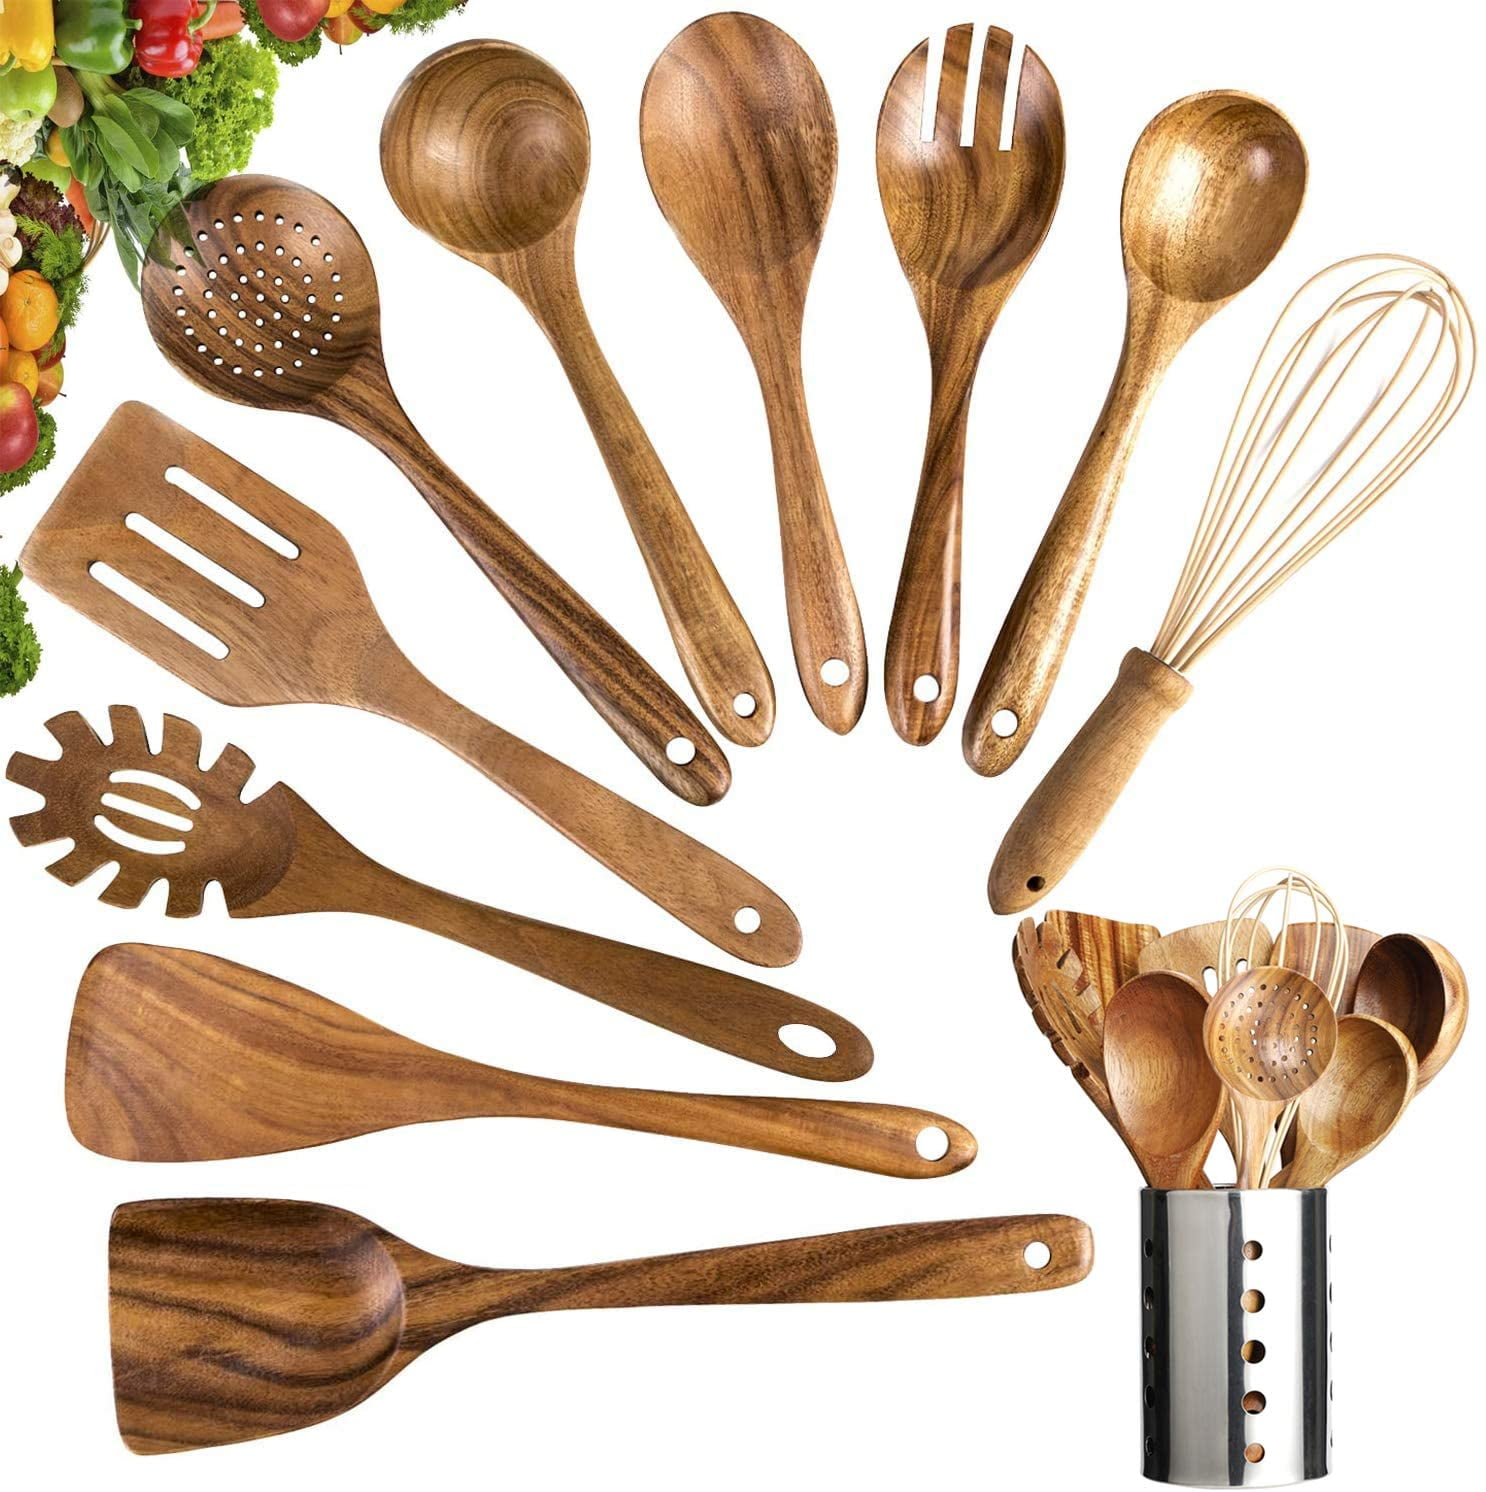 Ramen Tableware Utensils Wooden Spoon Kitchen Supplies Colander Soup Scoops 